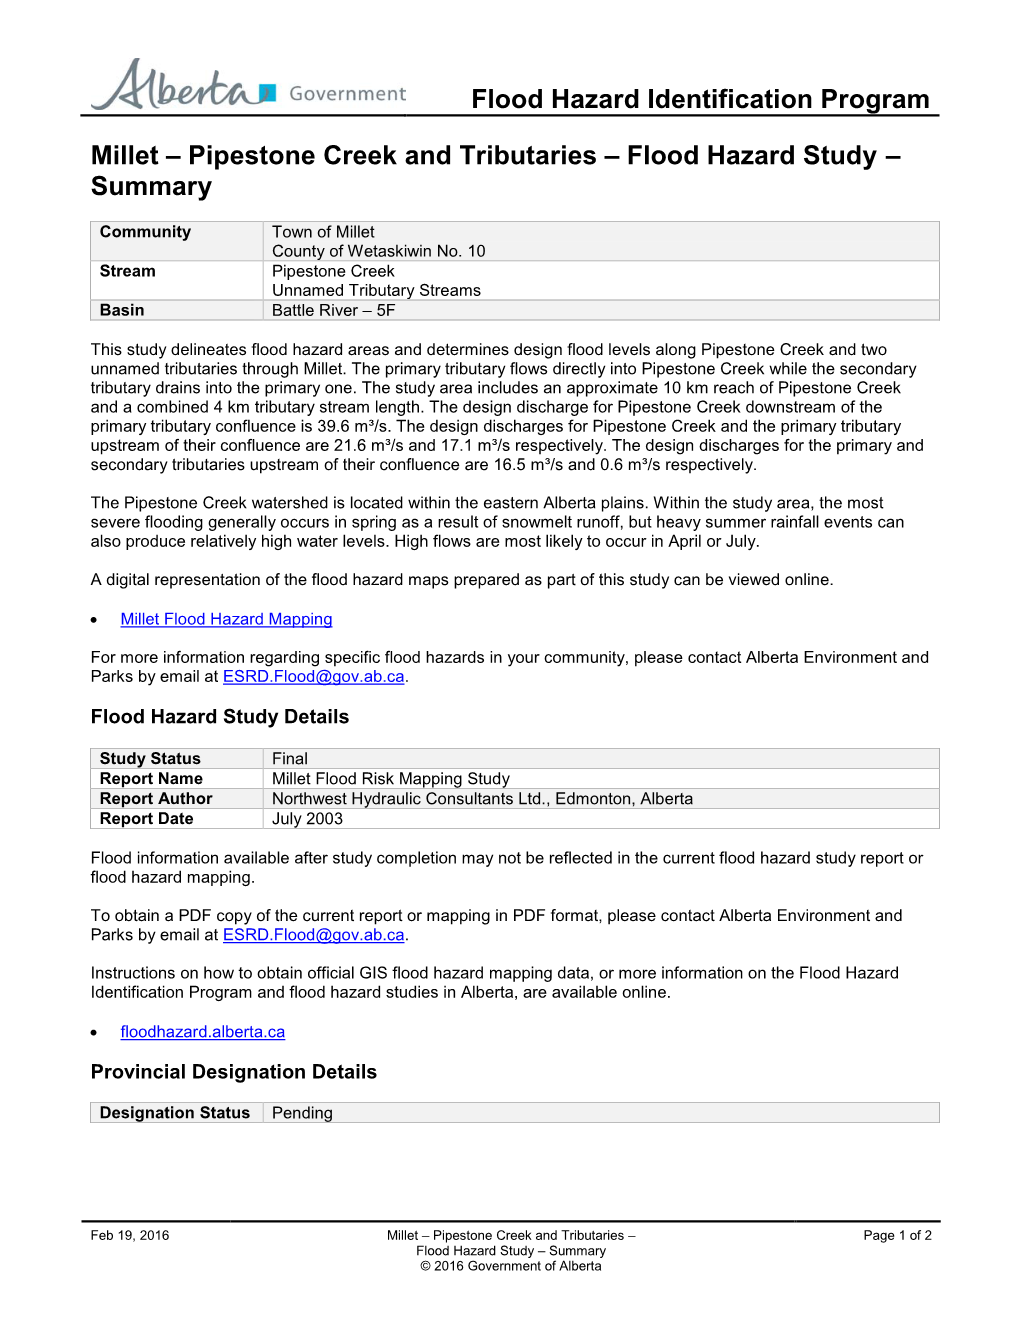 Millet – Pipestone Creek and Tributaries – Flood Hazard Study – Summary